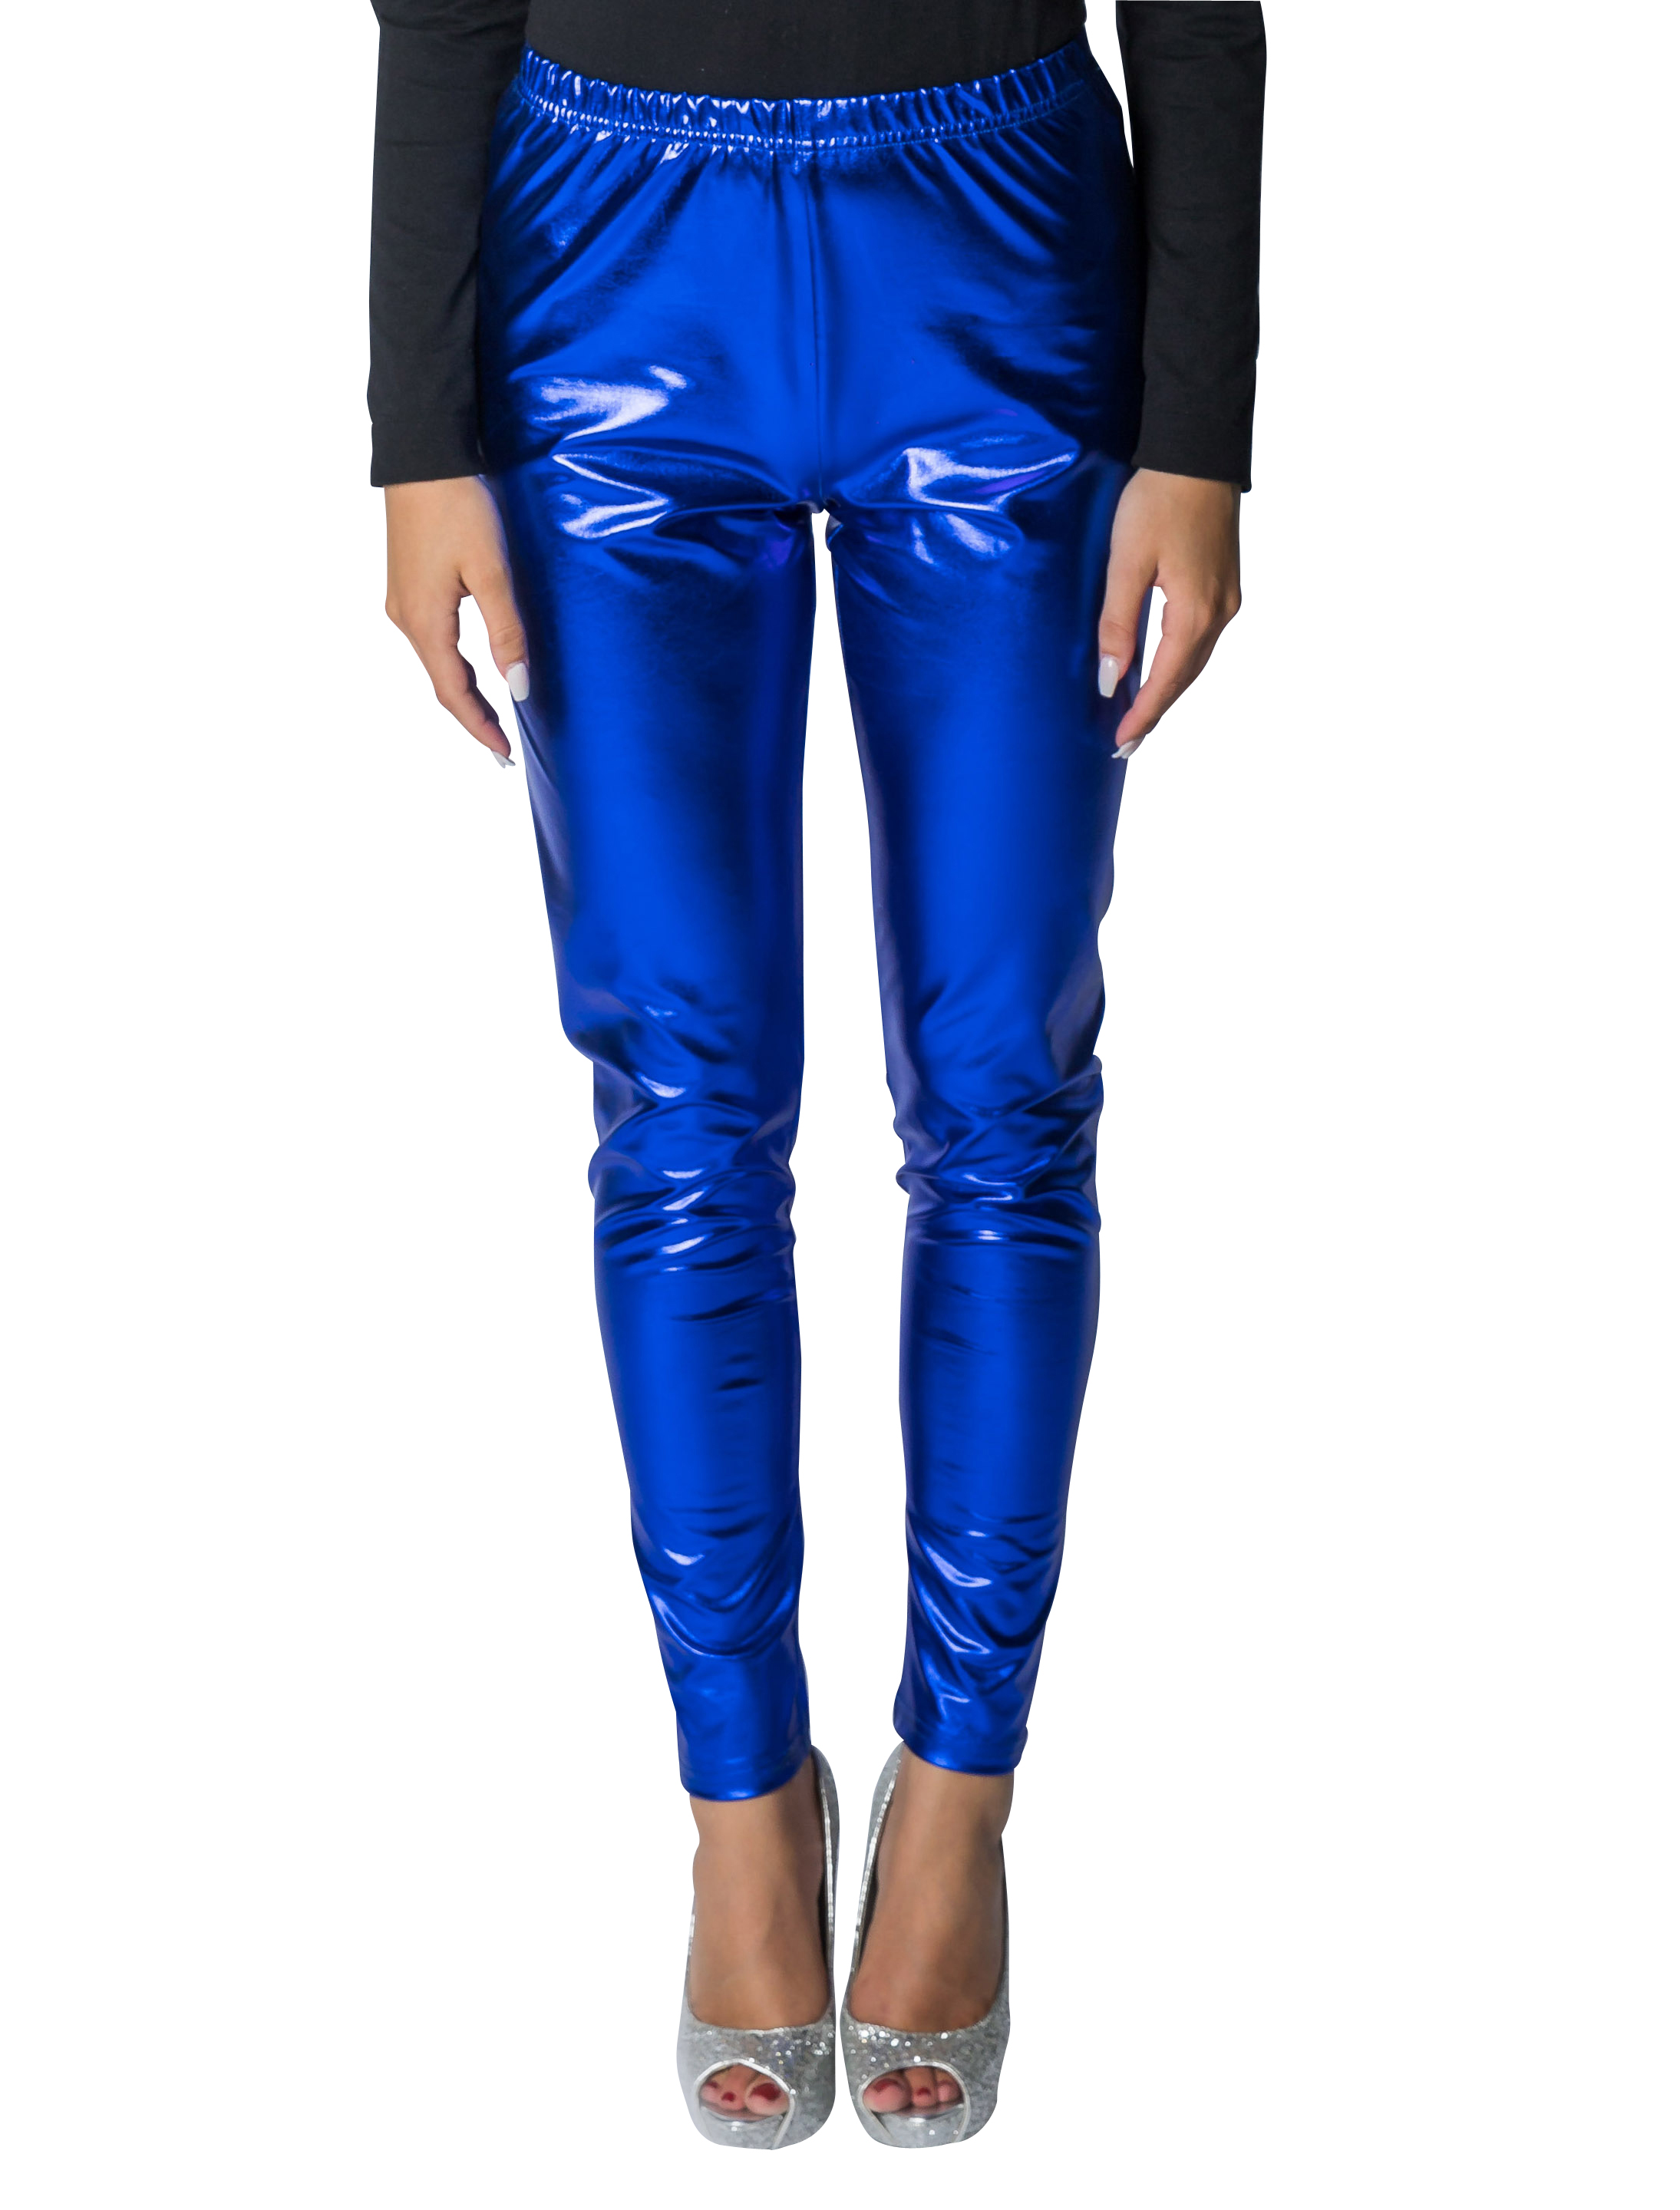 Leggings metallic blau L/XL